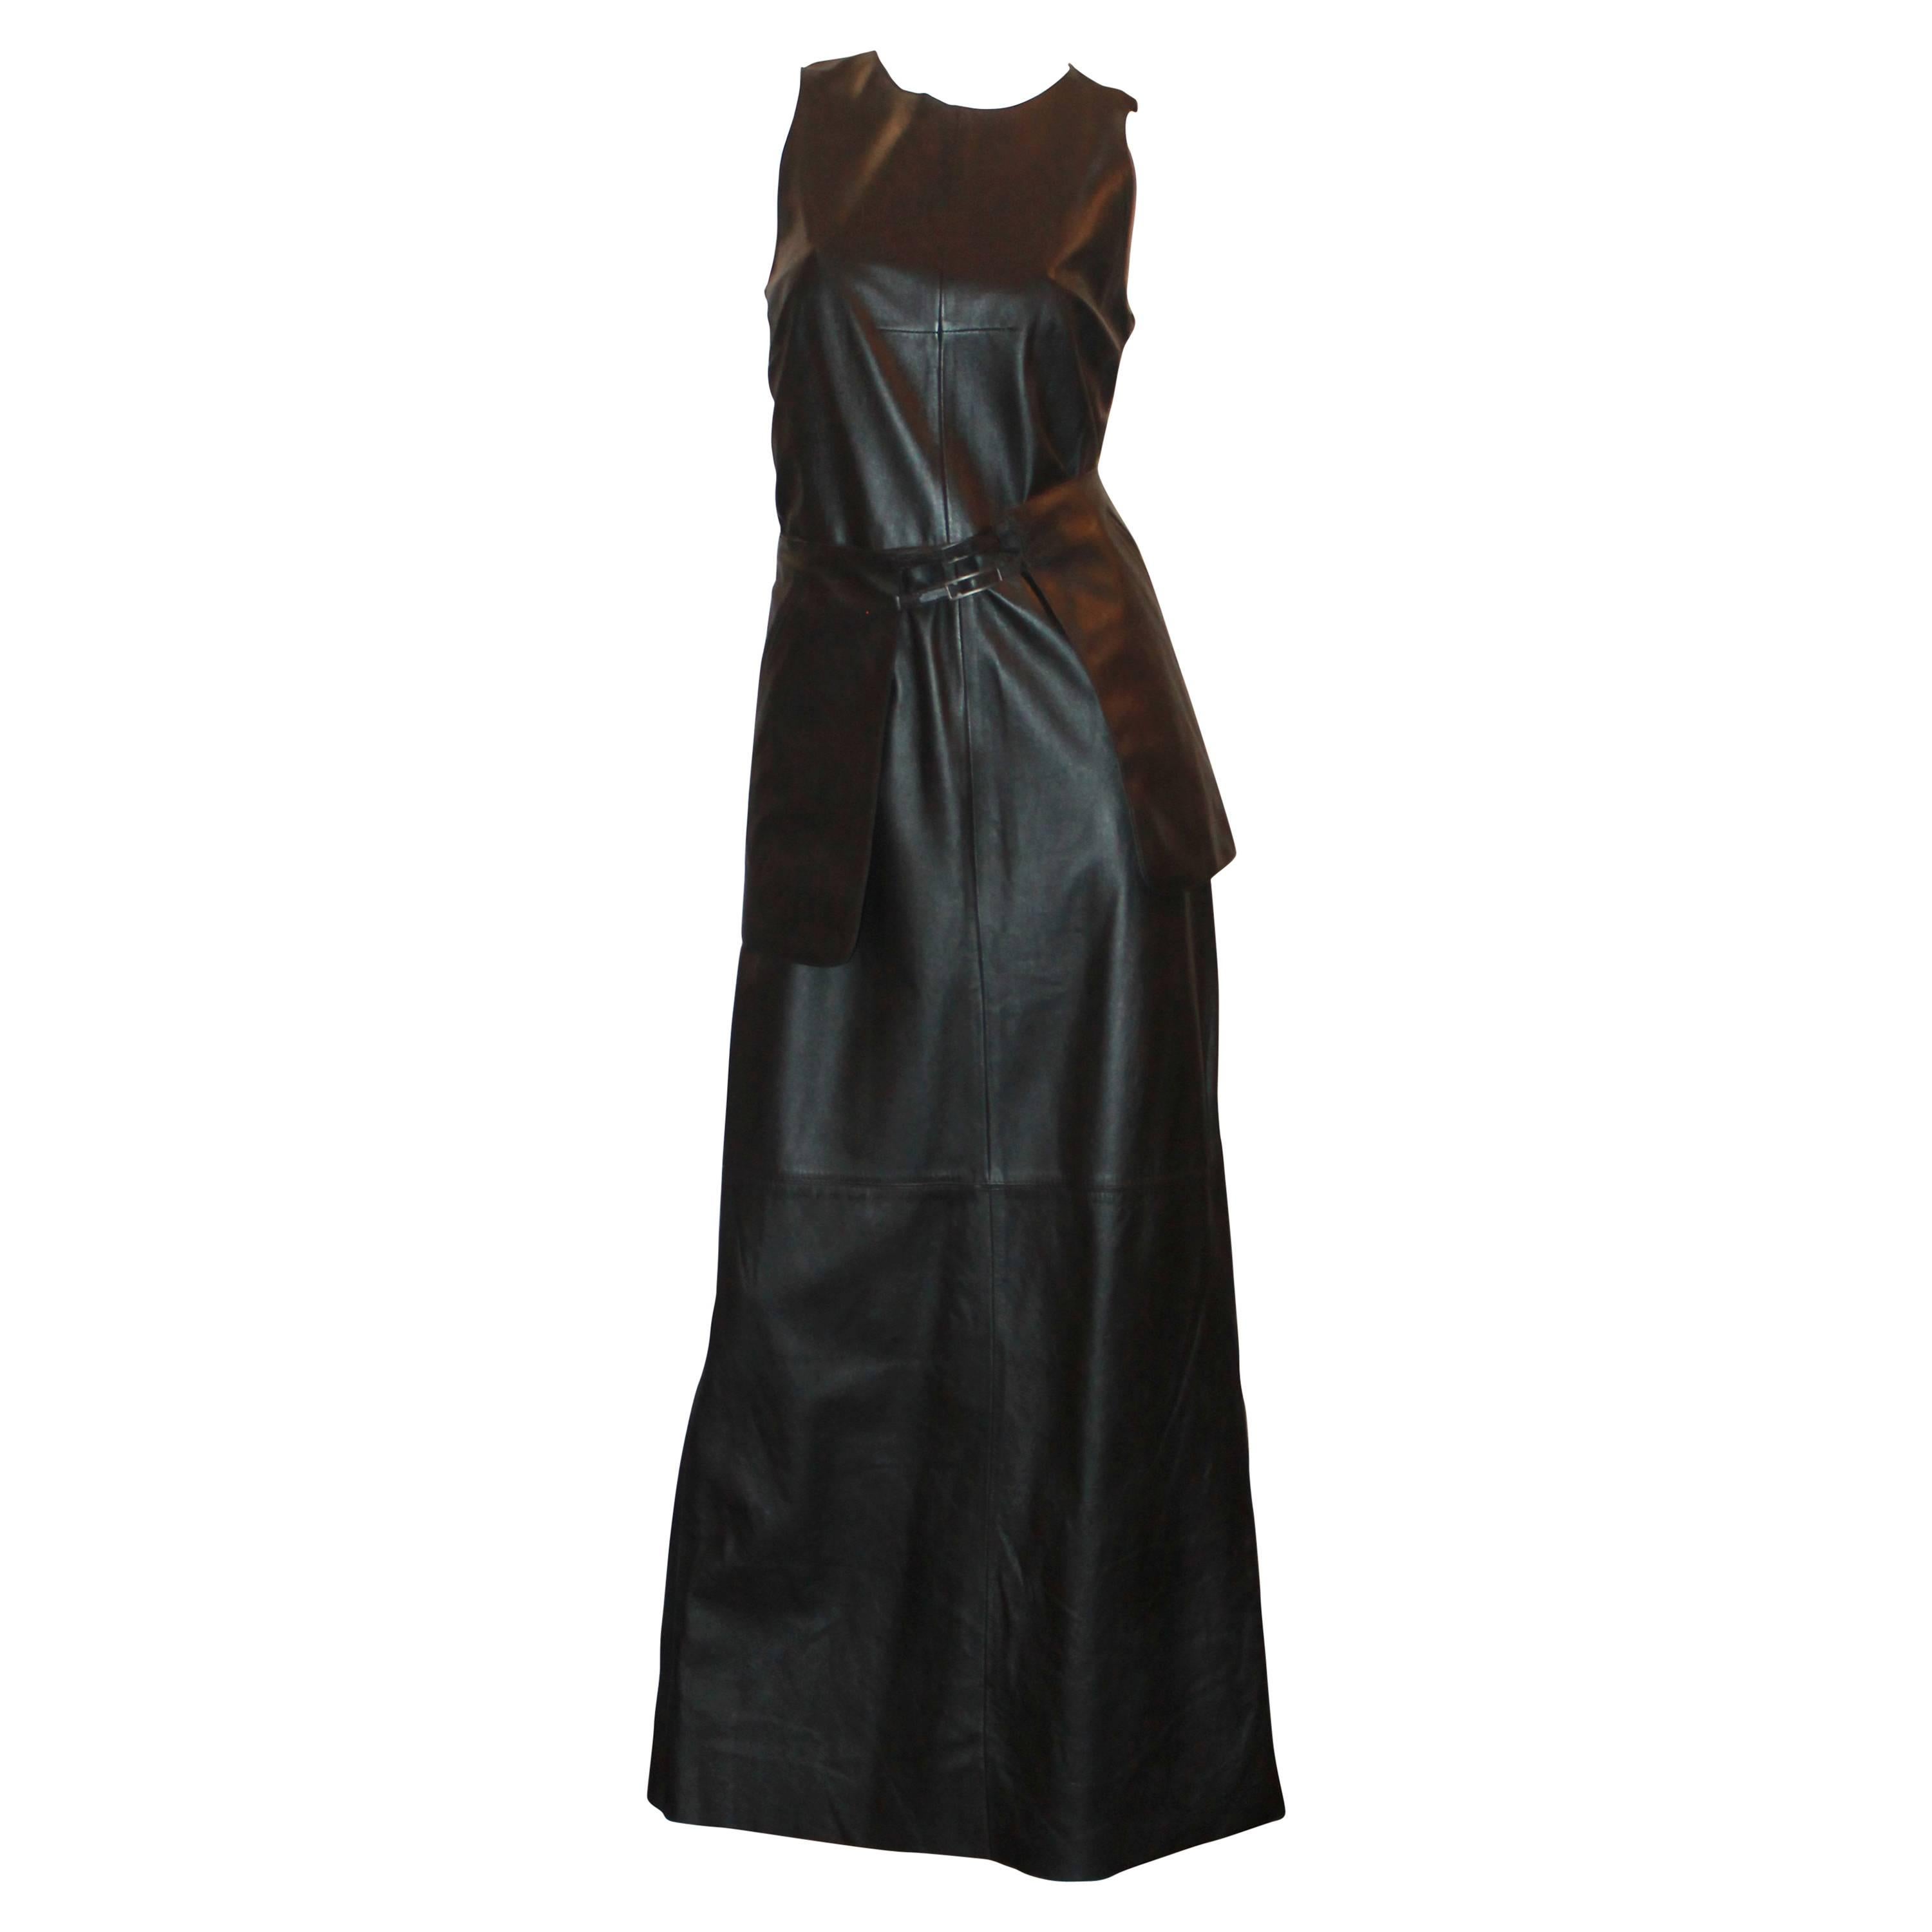 John Bartlett 1990's Chocolate Brown Leather Long Dress with Skirt Belt - 42